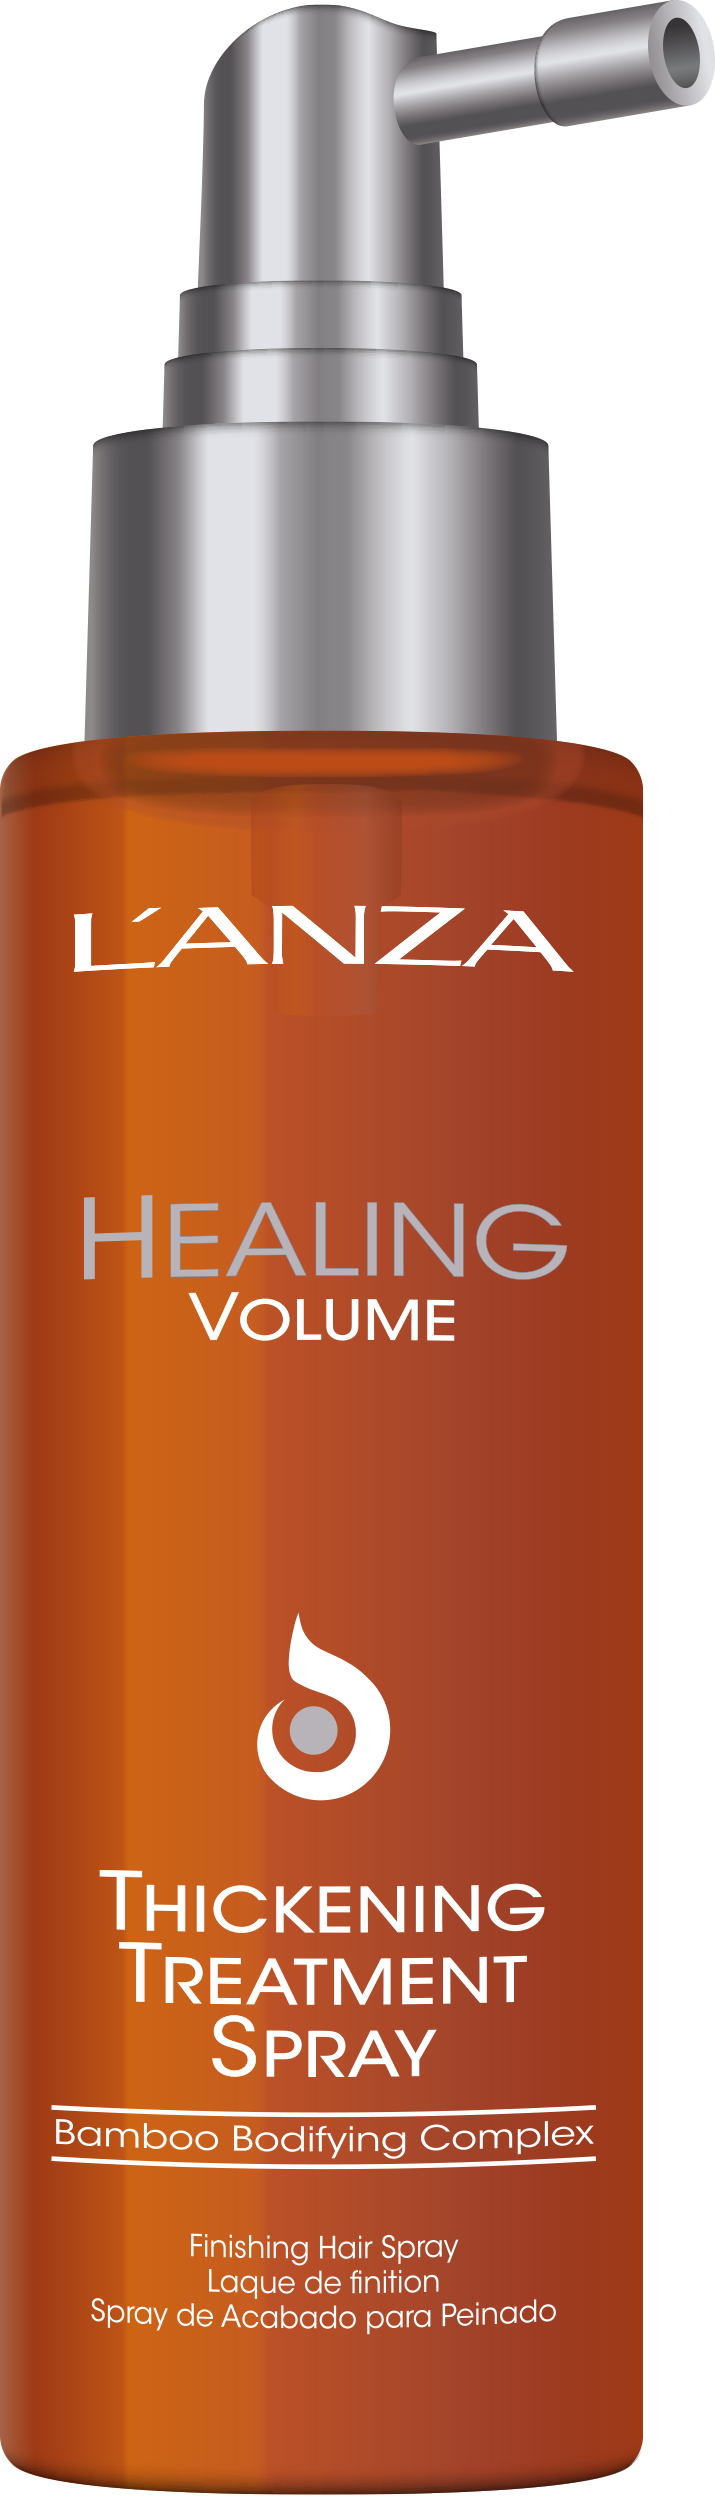 L'ANZA Healing Volume Treatment